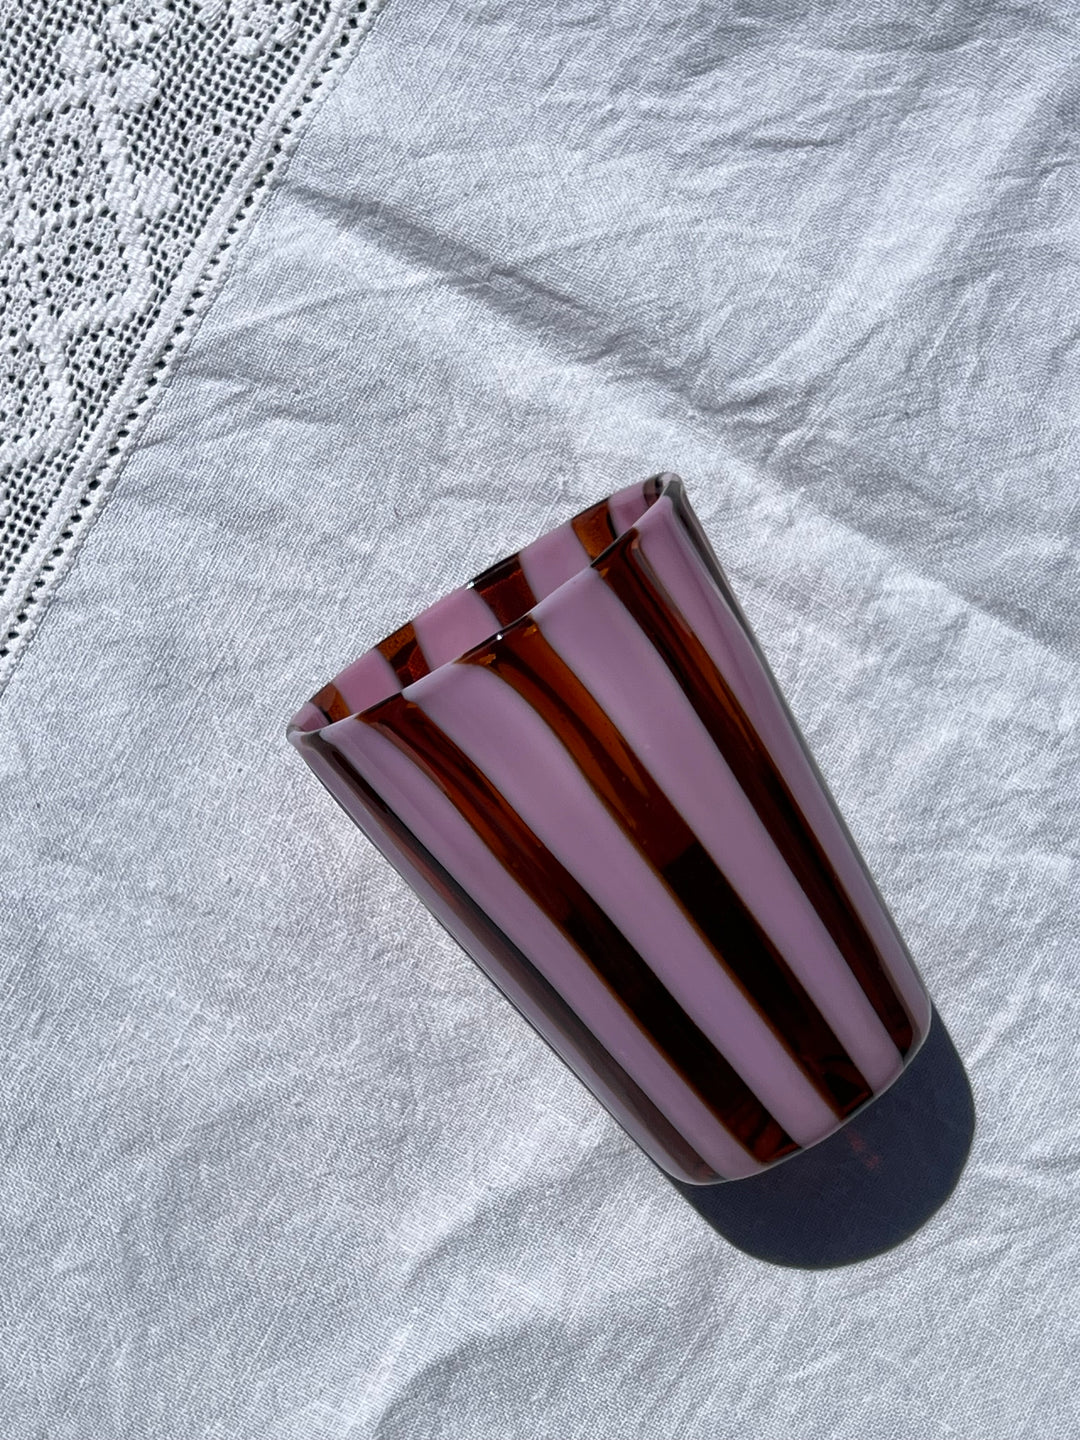 Håndblæst Murano Glas i Gio Ponti Stil med Karamelfarvede og Ametyst Striber Murano